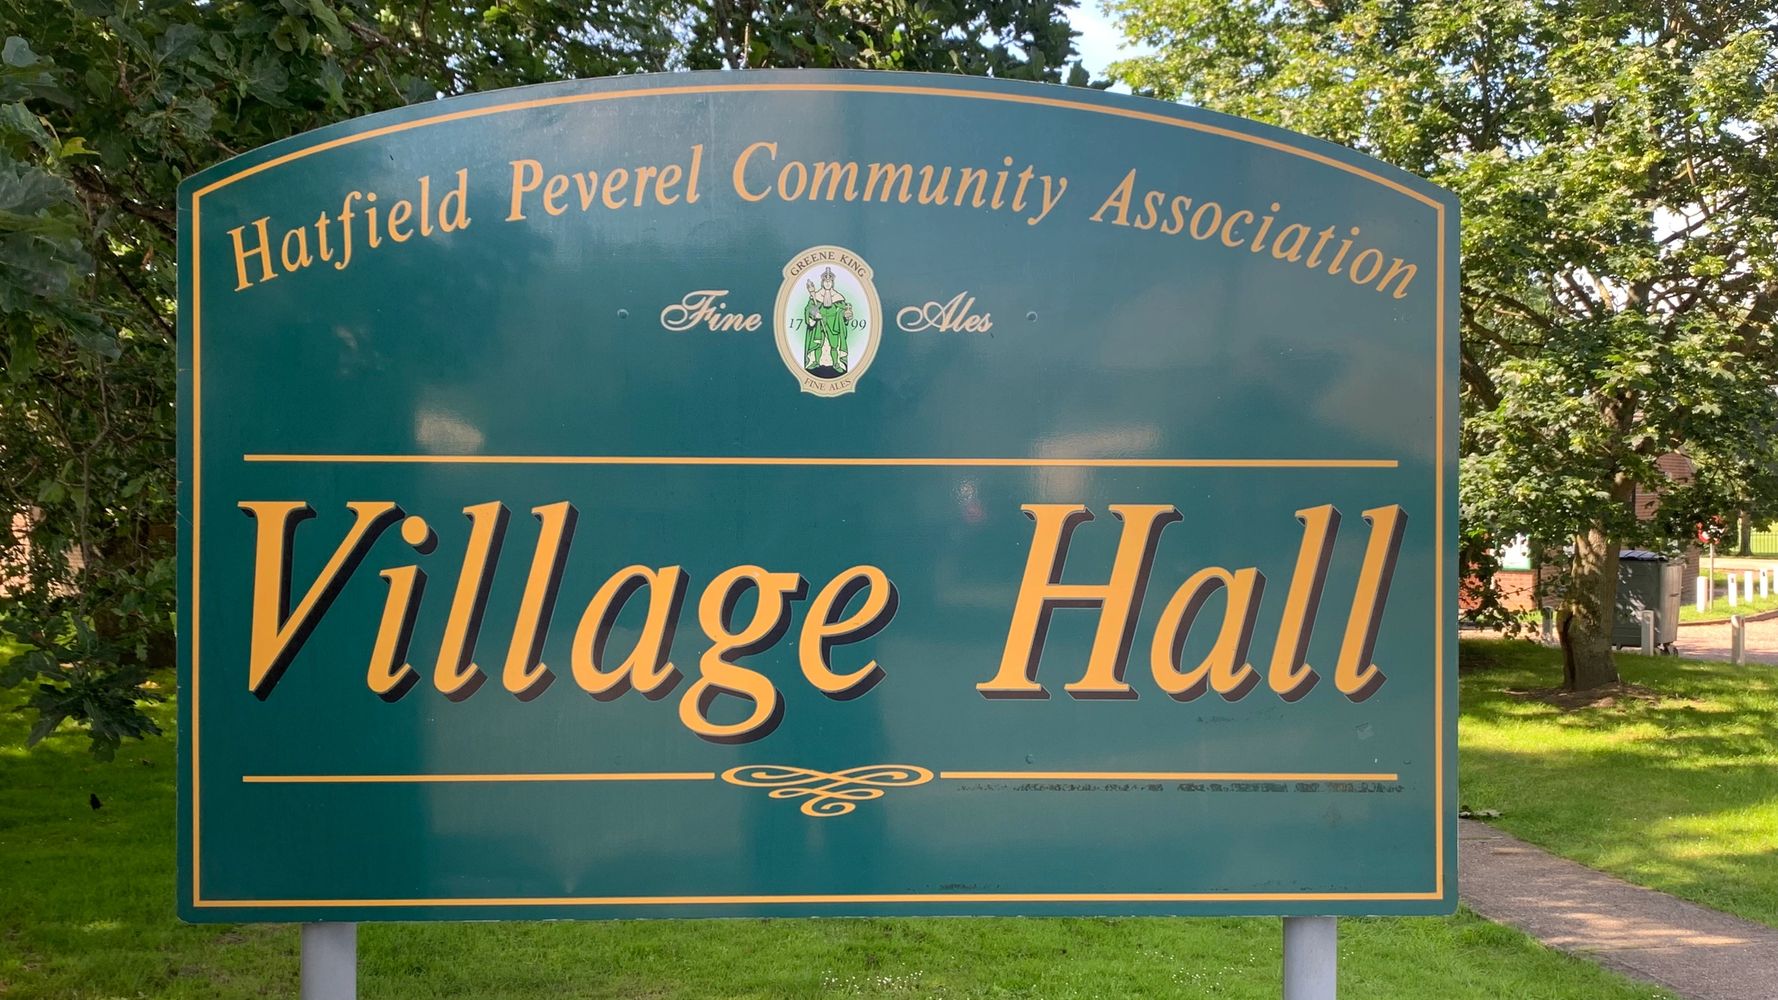 Hatfield Peverel Village Hall sign